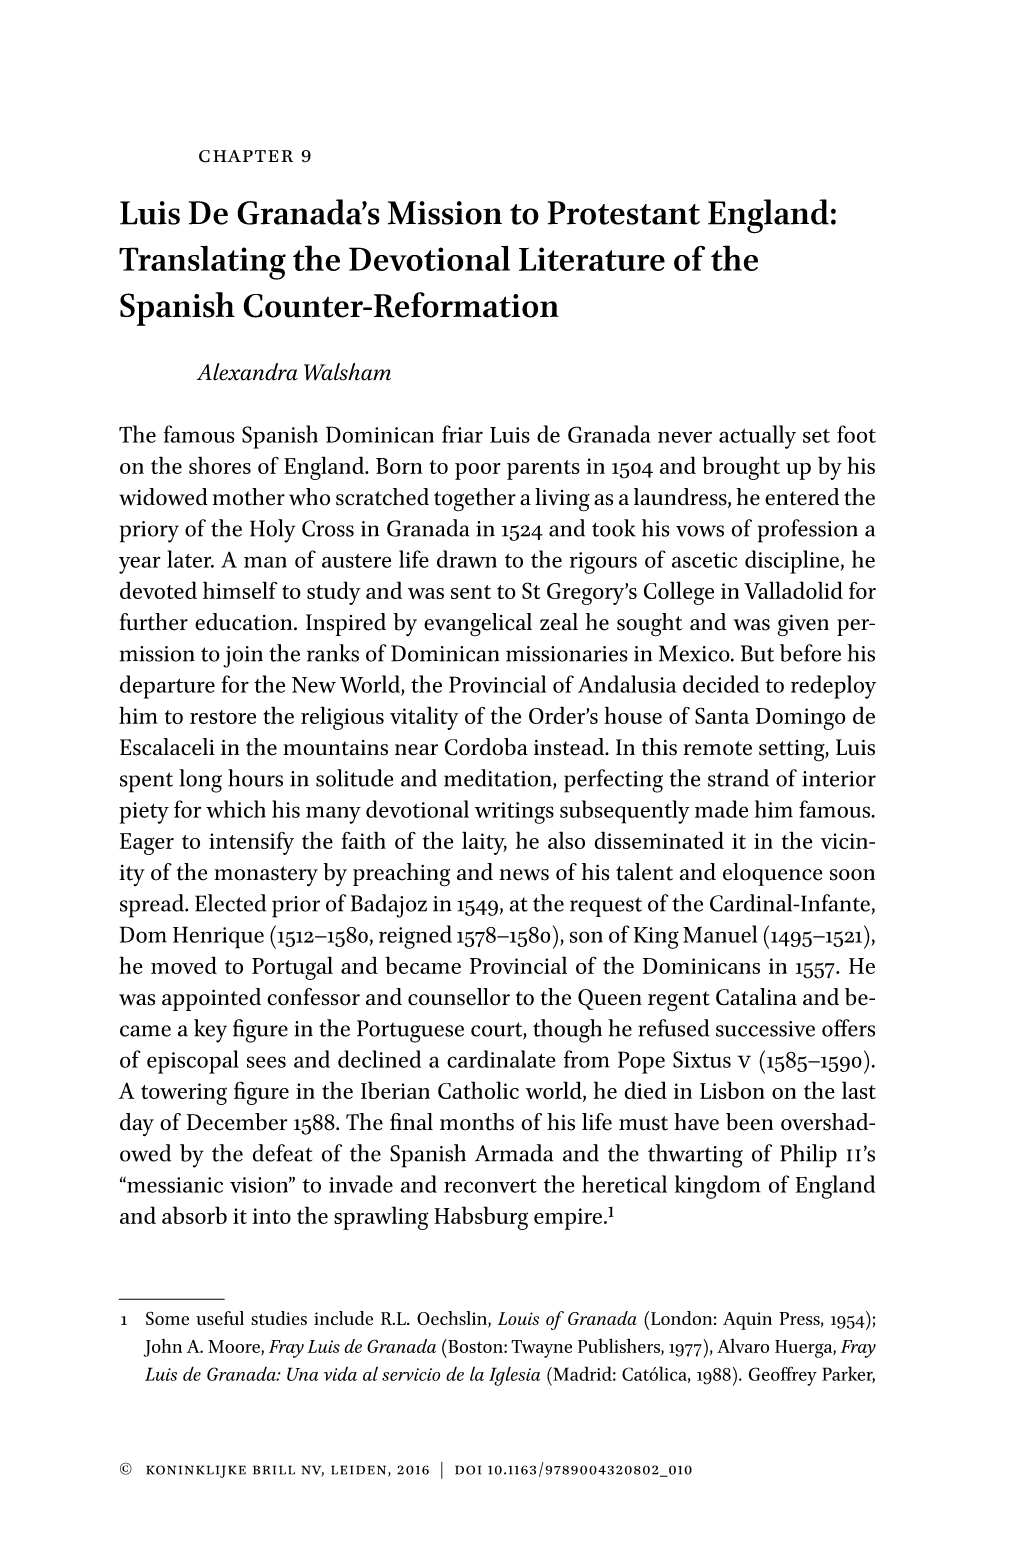 Luis De Granada's Mission to Protestant England